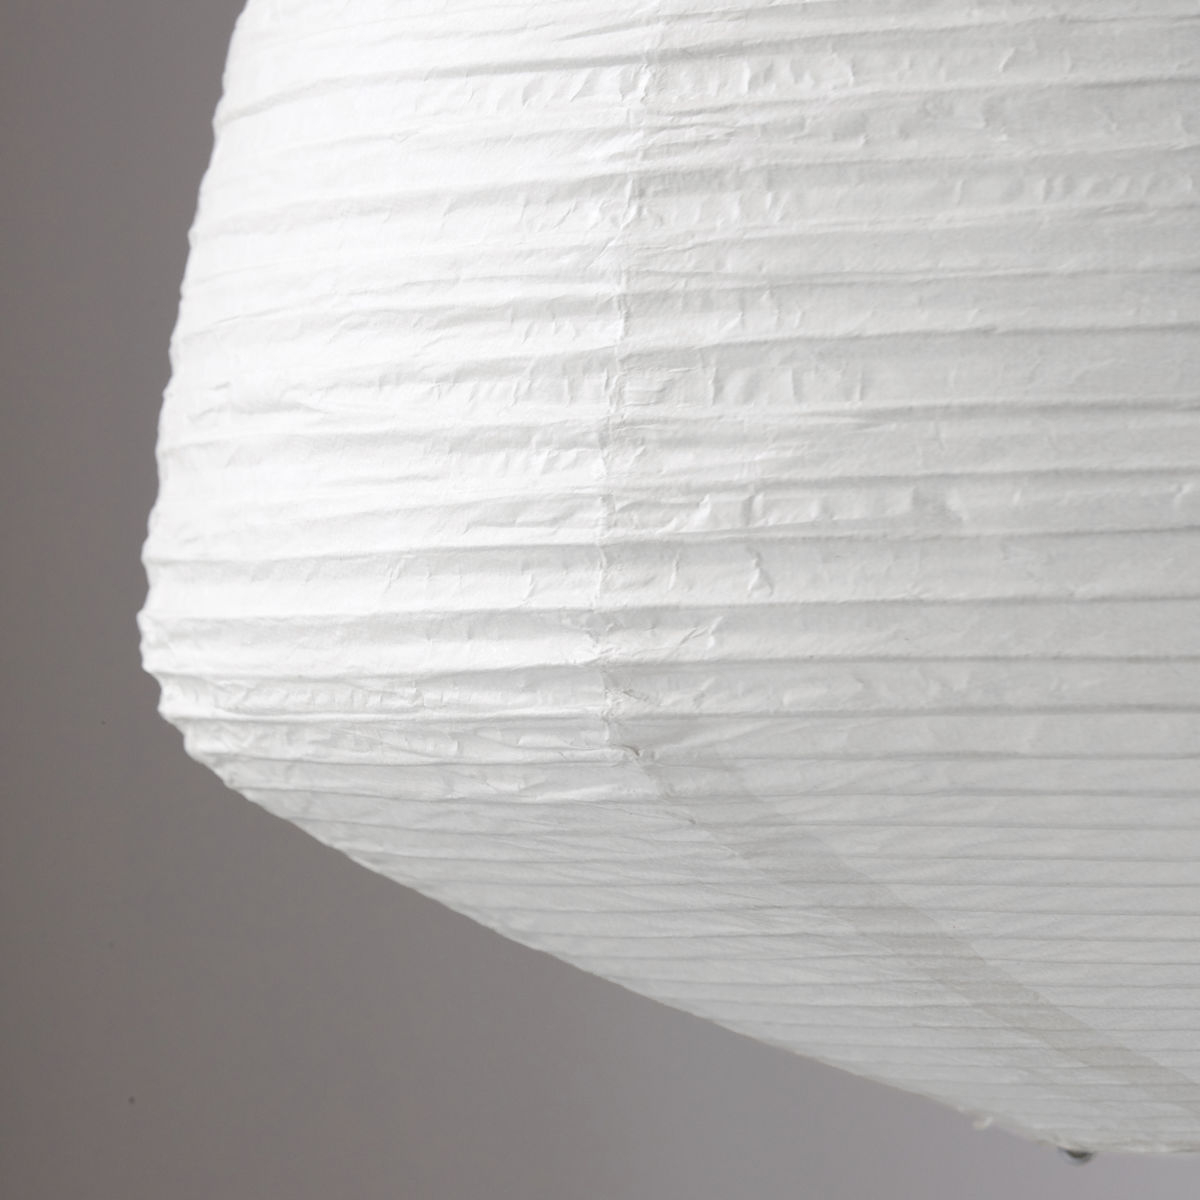 Bidar Lampeskærm, Ø 50 cm, hvid